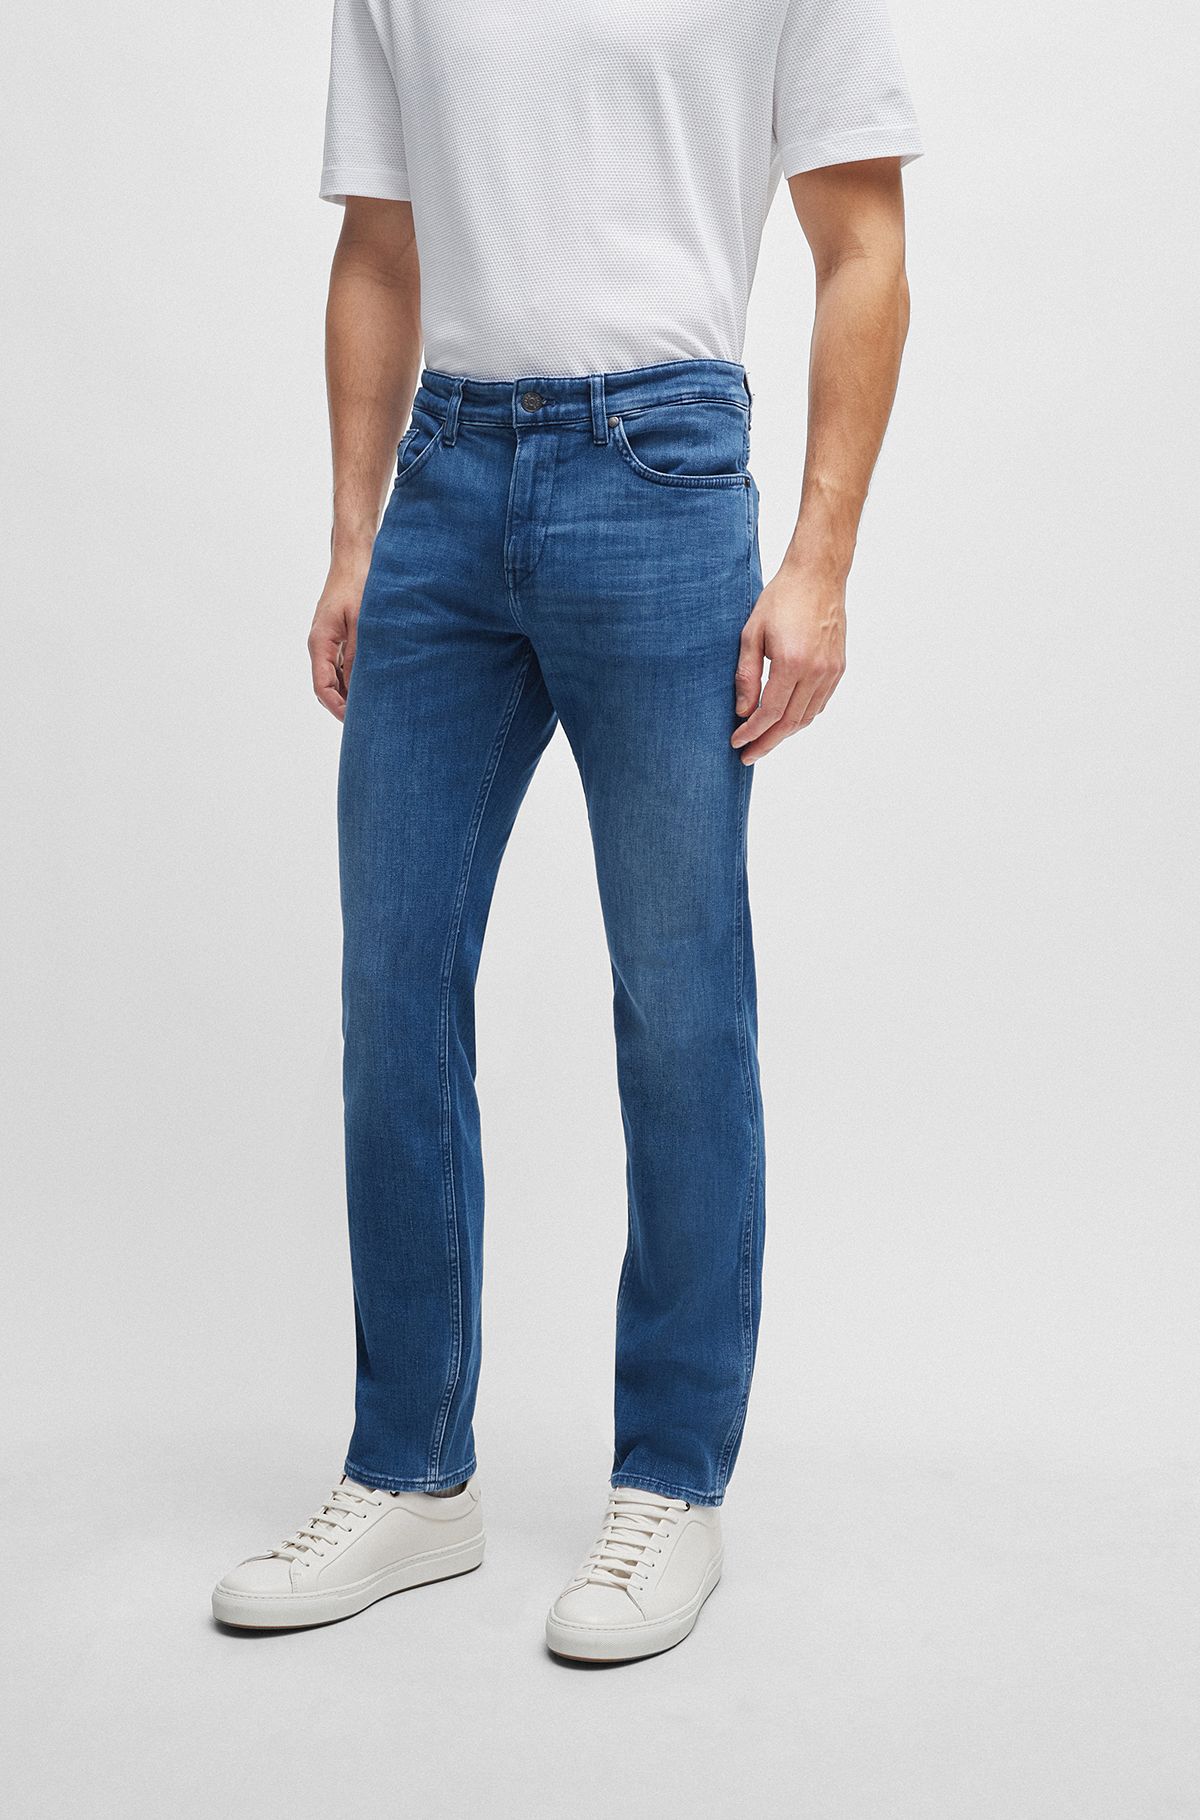 cashmere-touch in denim jeans Slim-fit Italian - blue BOSS